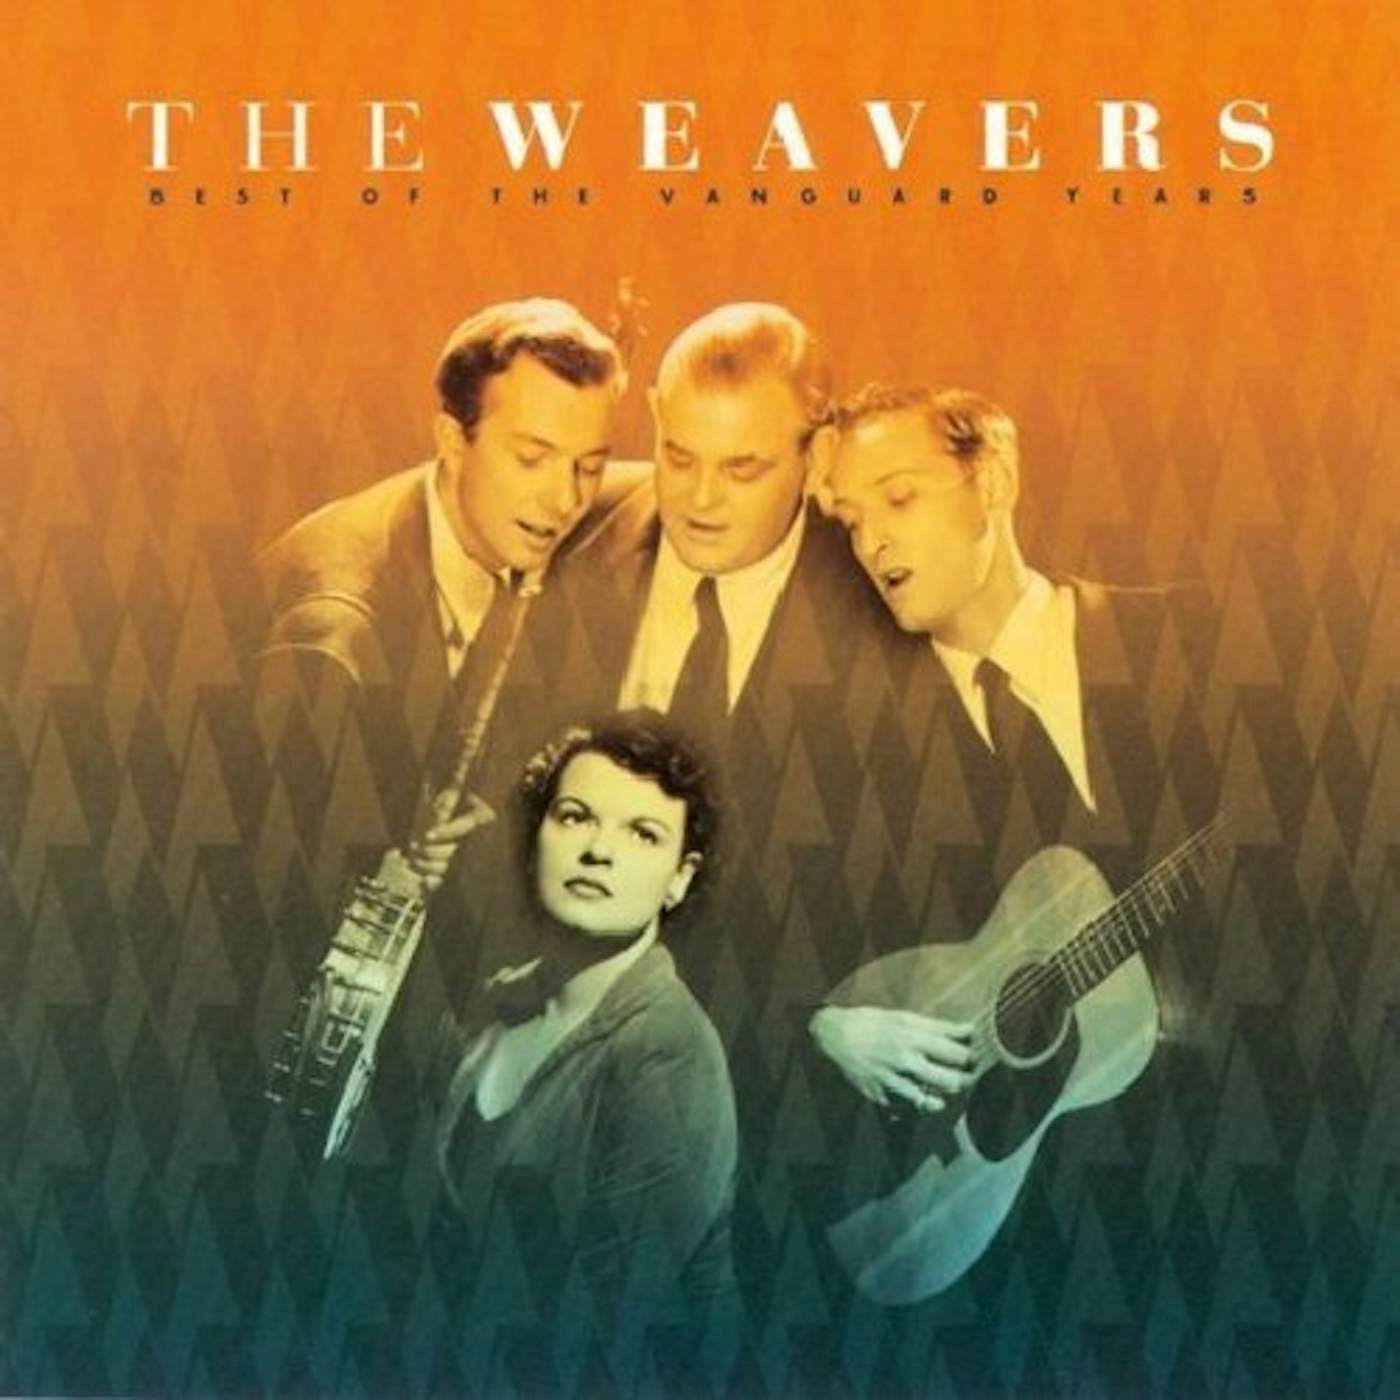 Weavers BEST OF THE VANGUARD YEARS CD